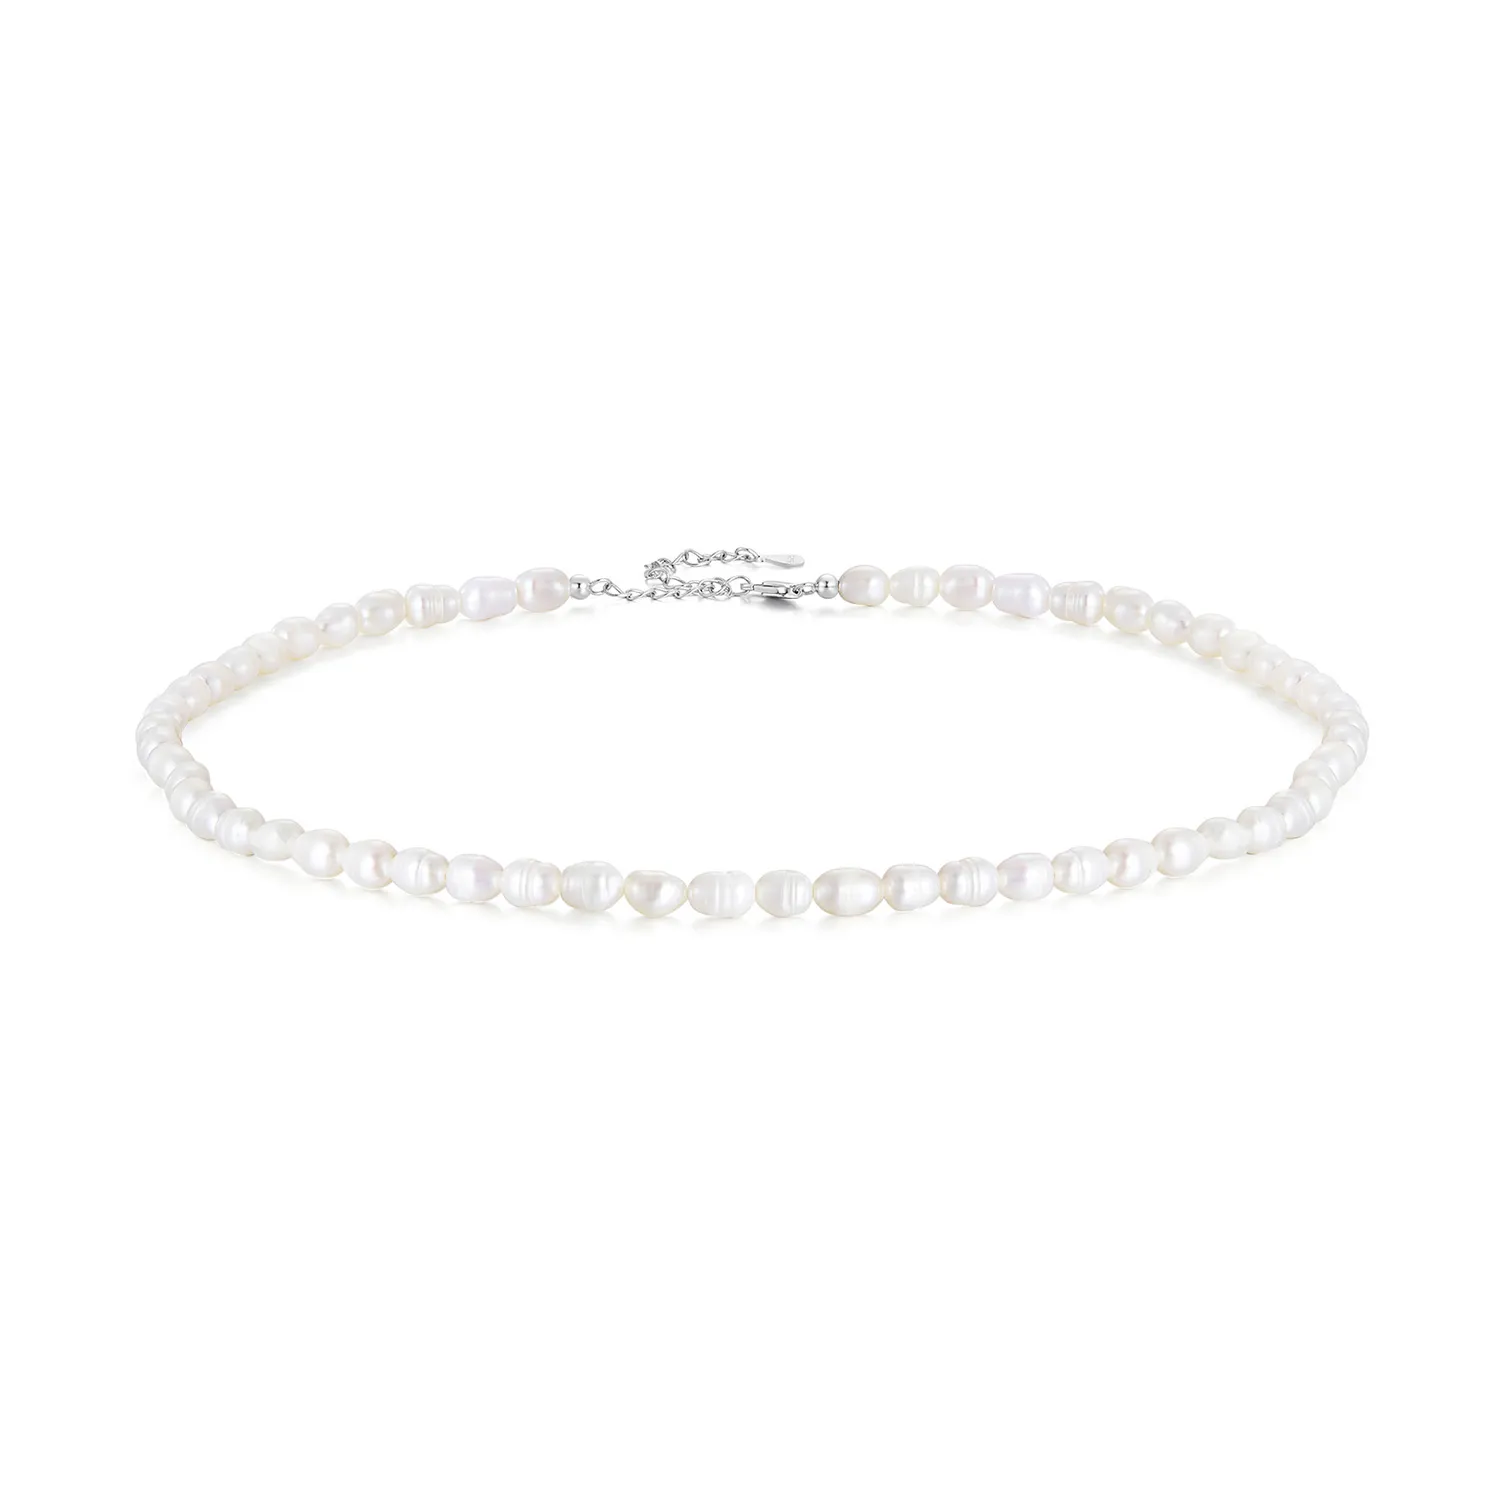 Pandora Style Pearl Necklace - BSN272